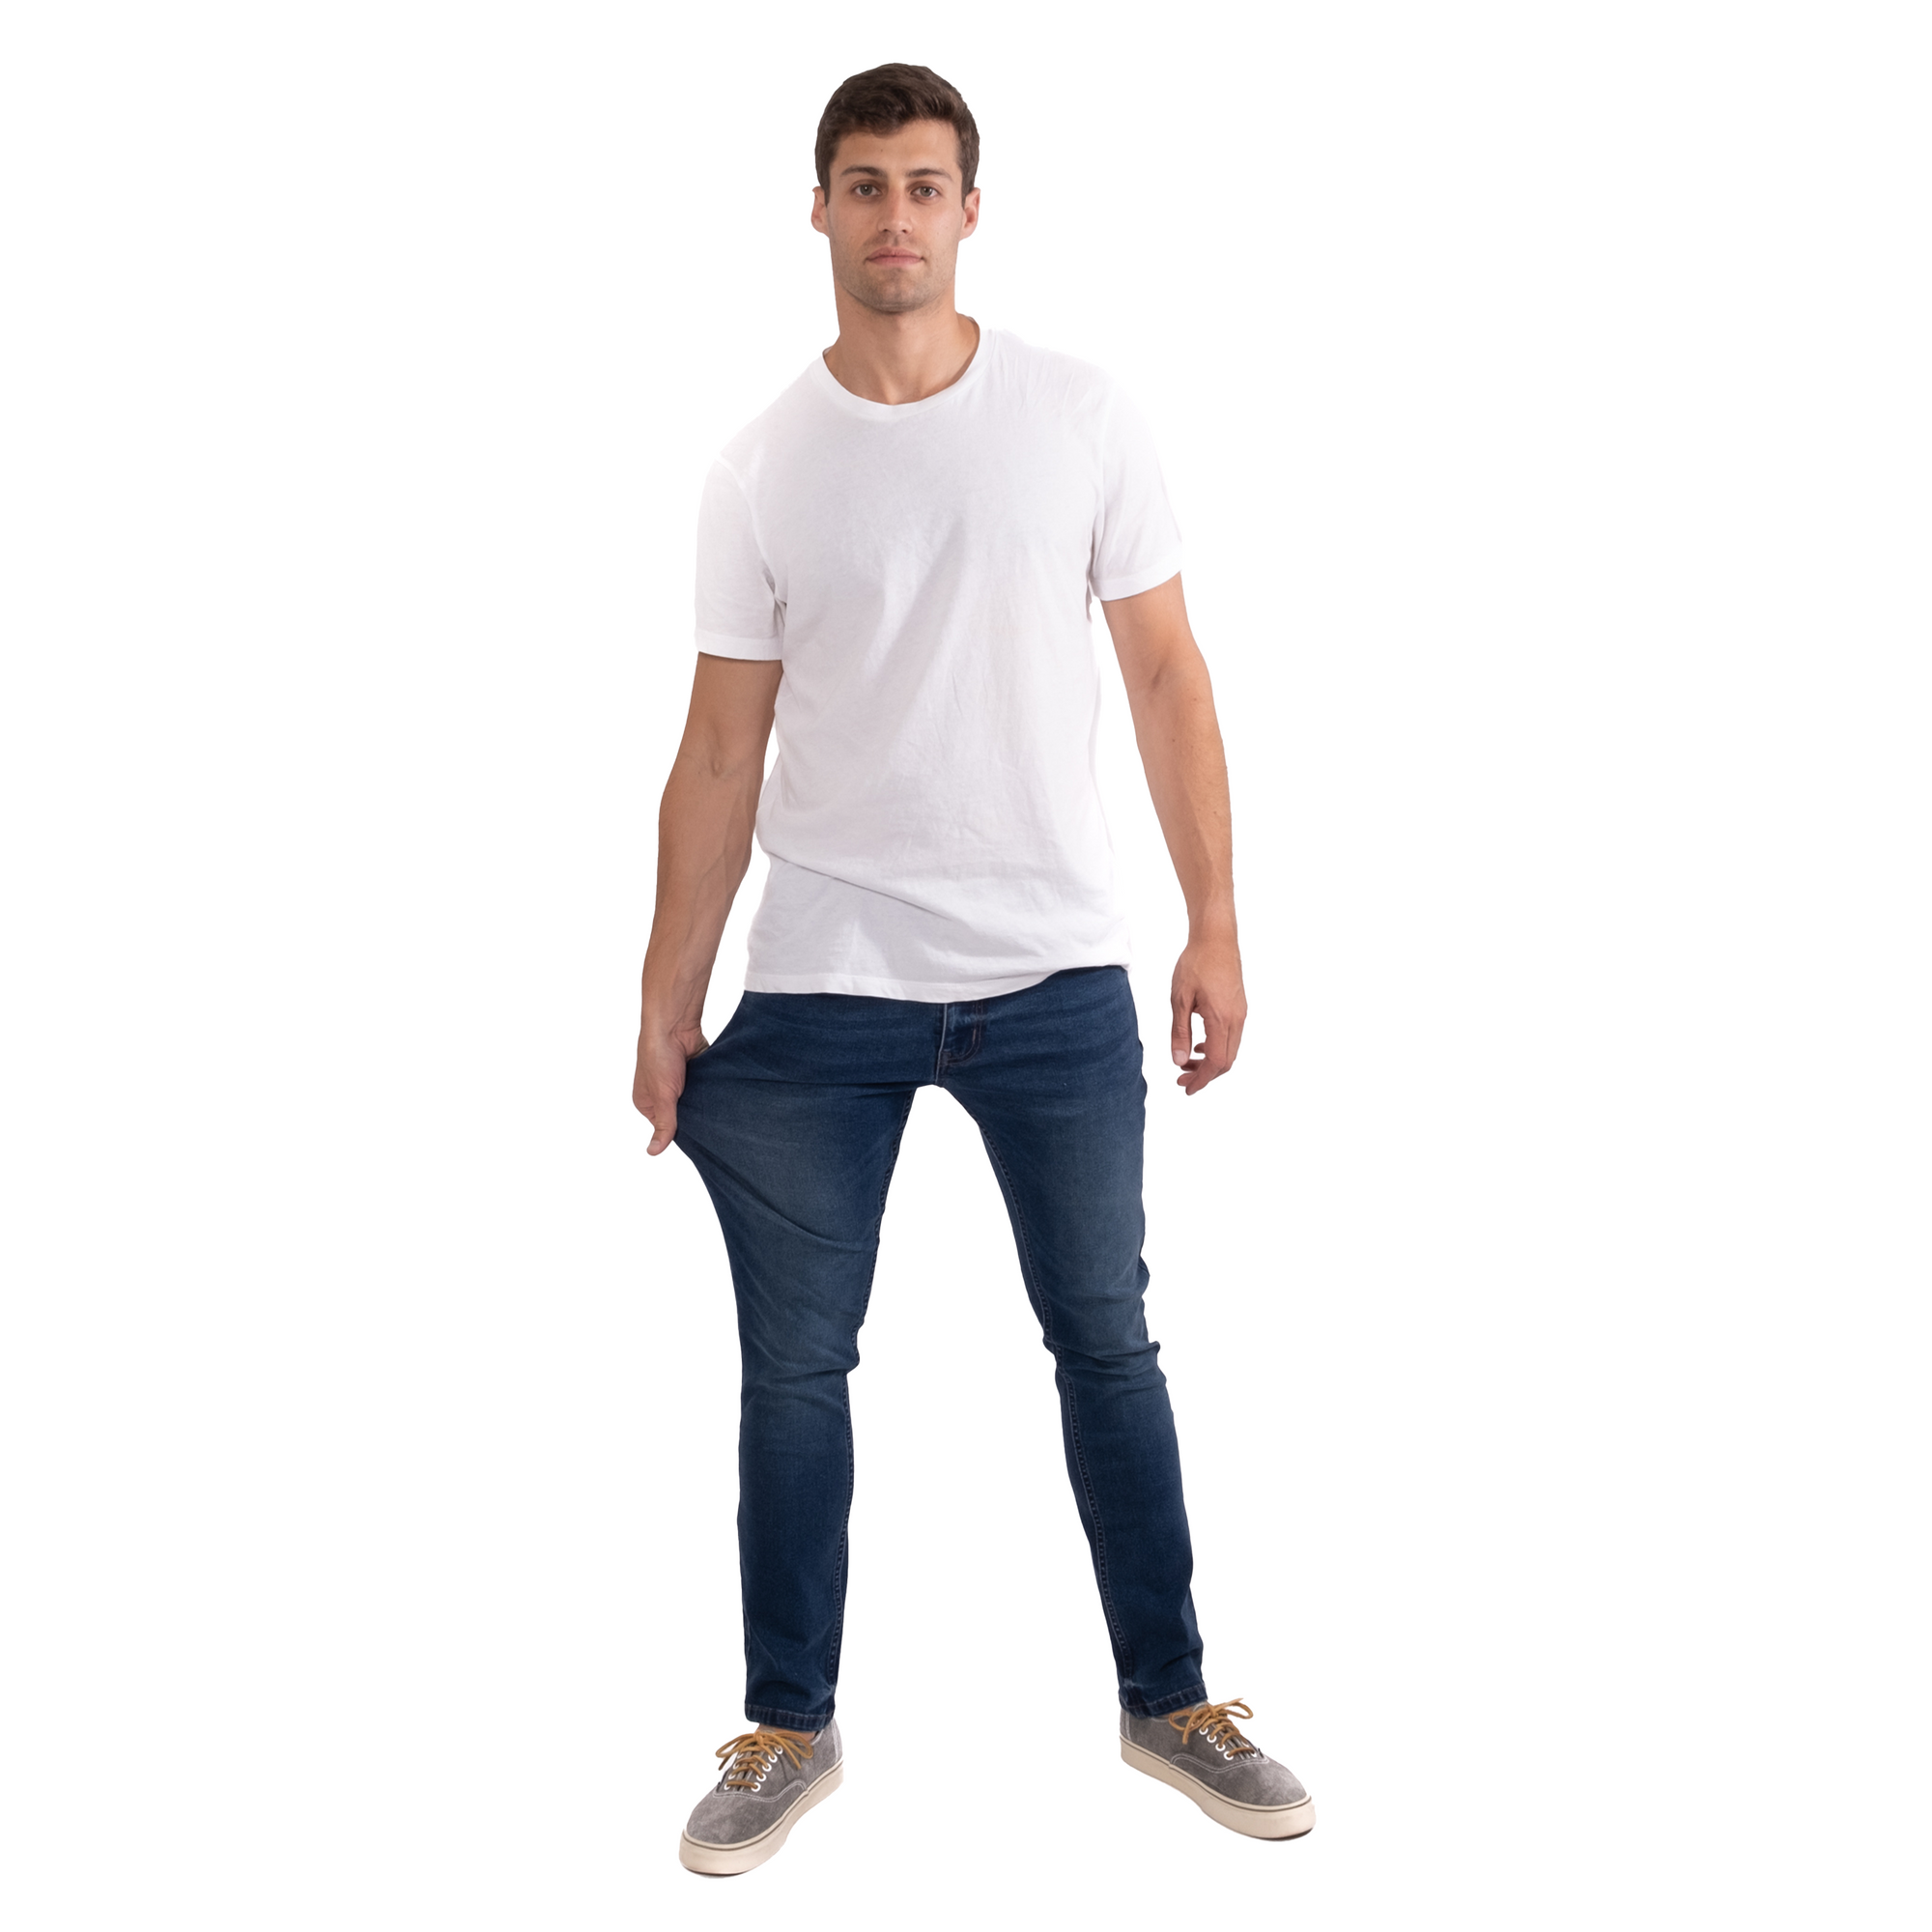 Slim Fit / Admiral - Medium Wash Jeans | The Perfect Jean